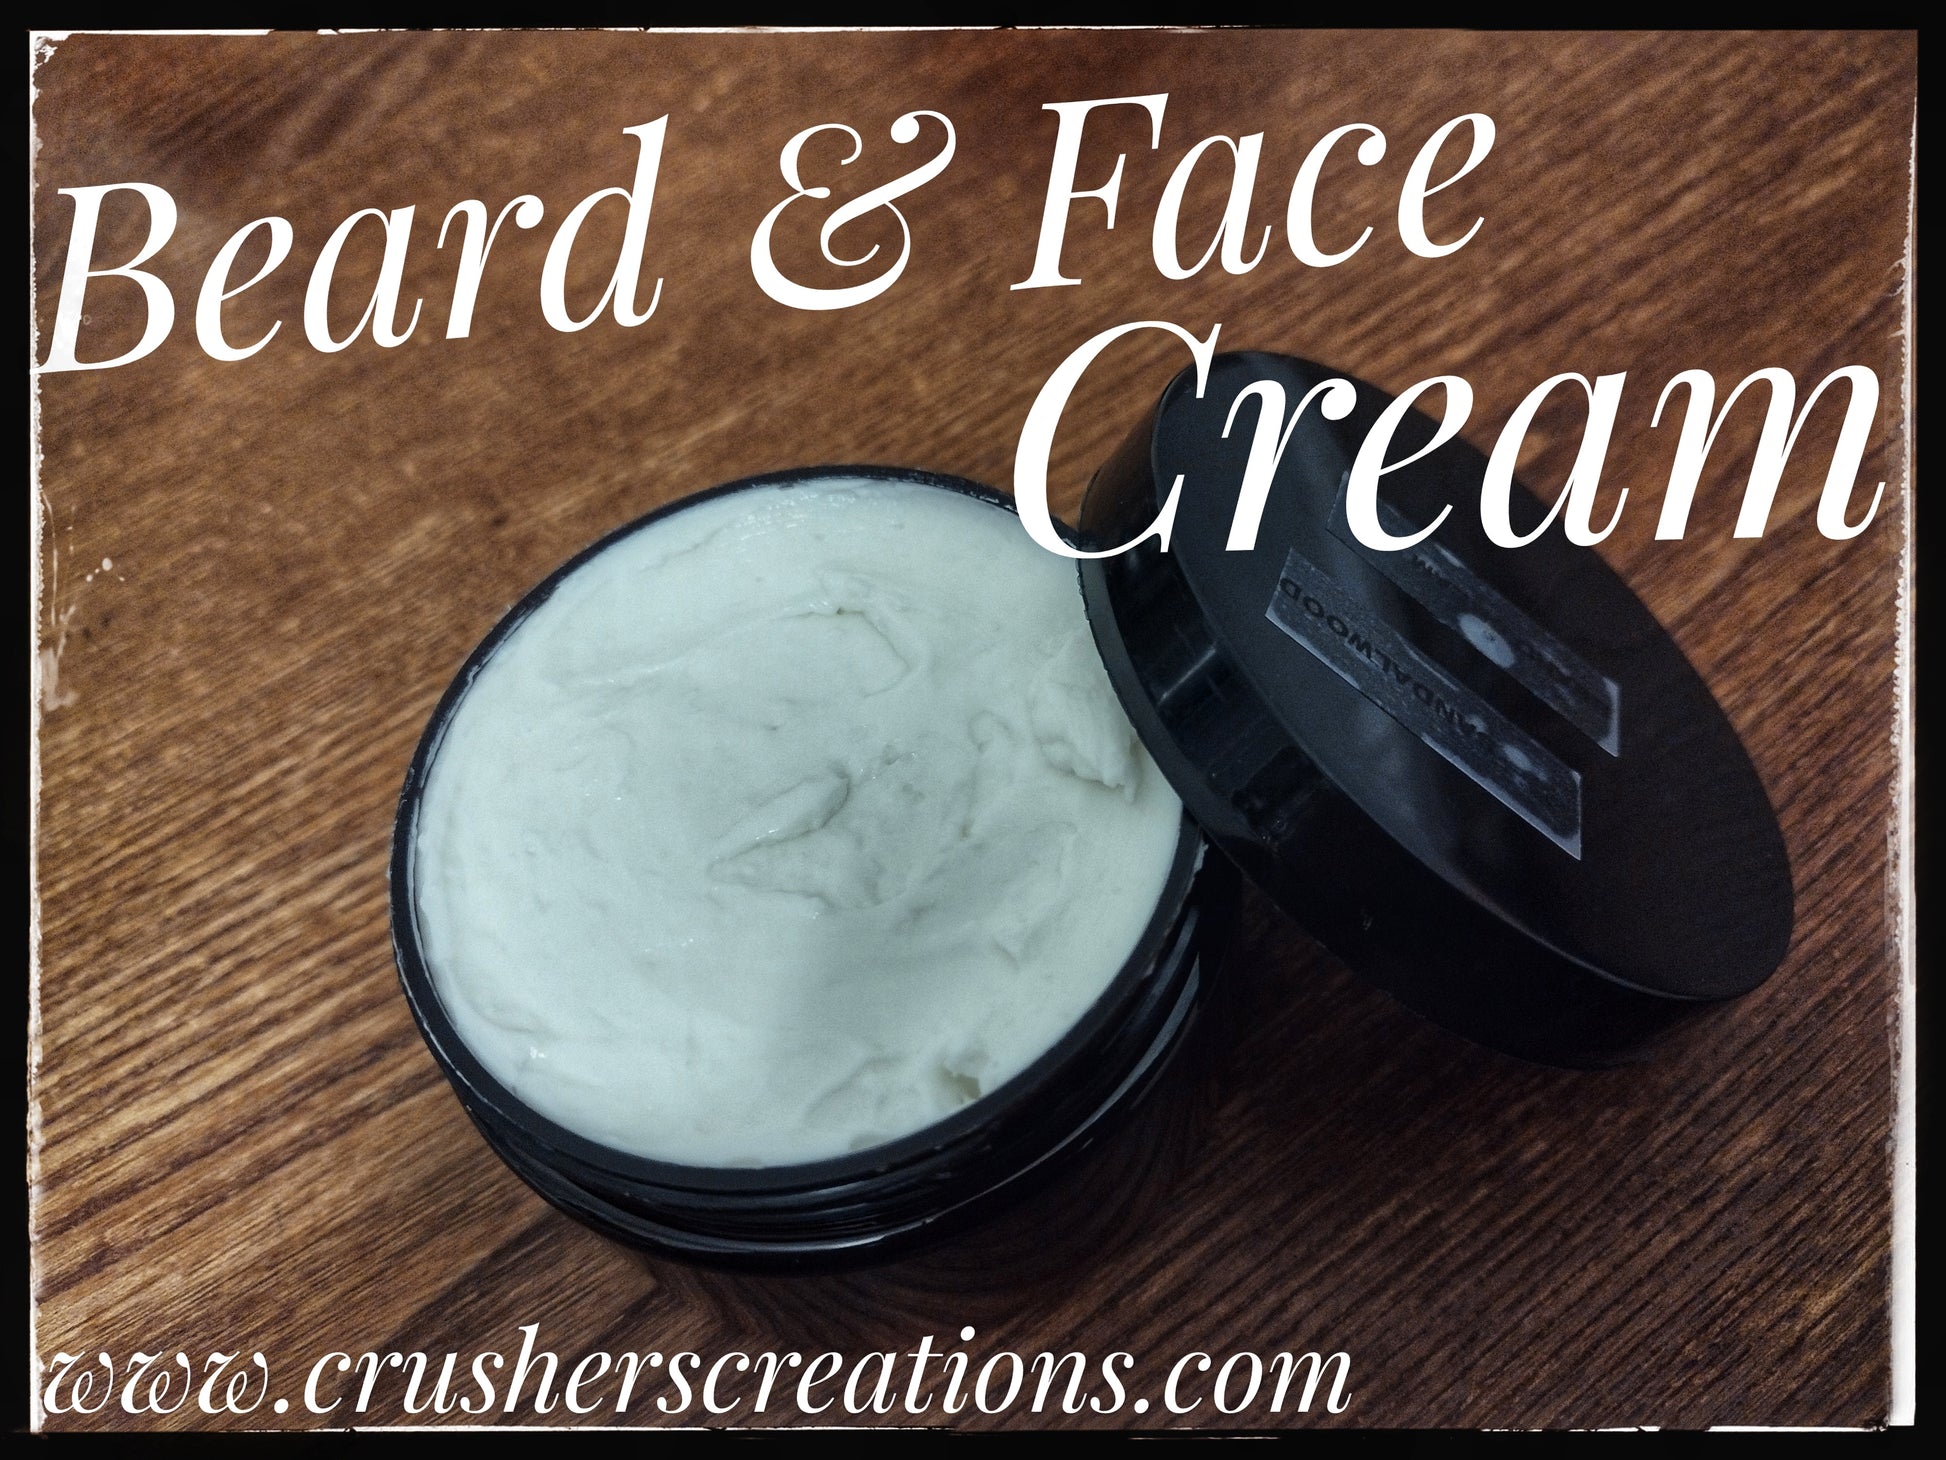 Beard & Face Cream, Crushers Creations 